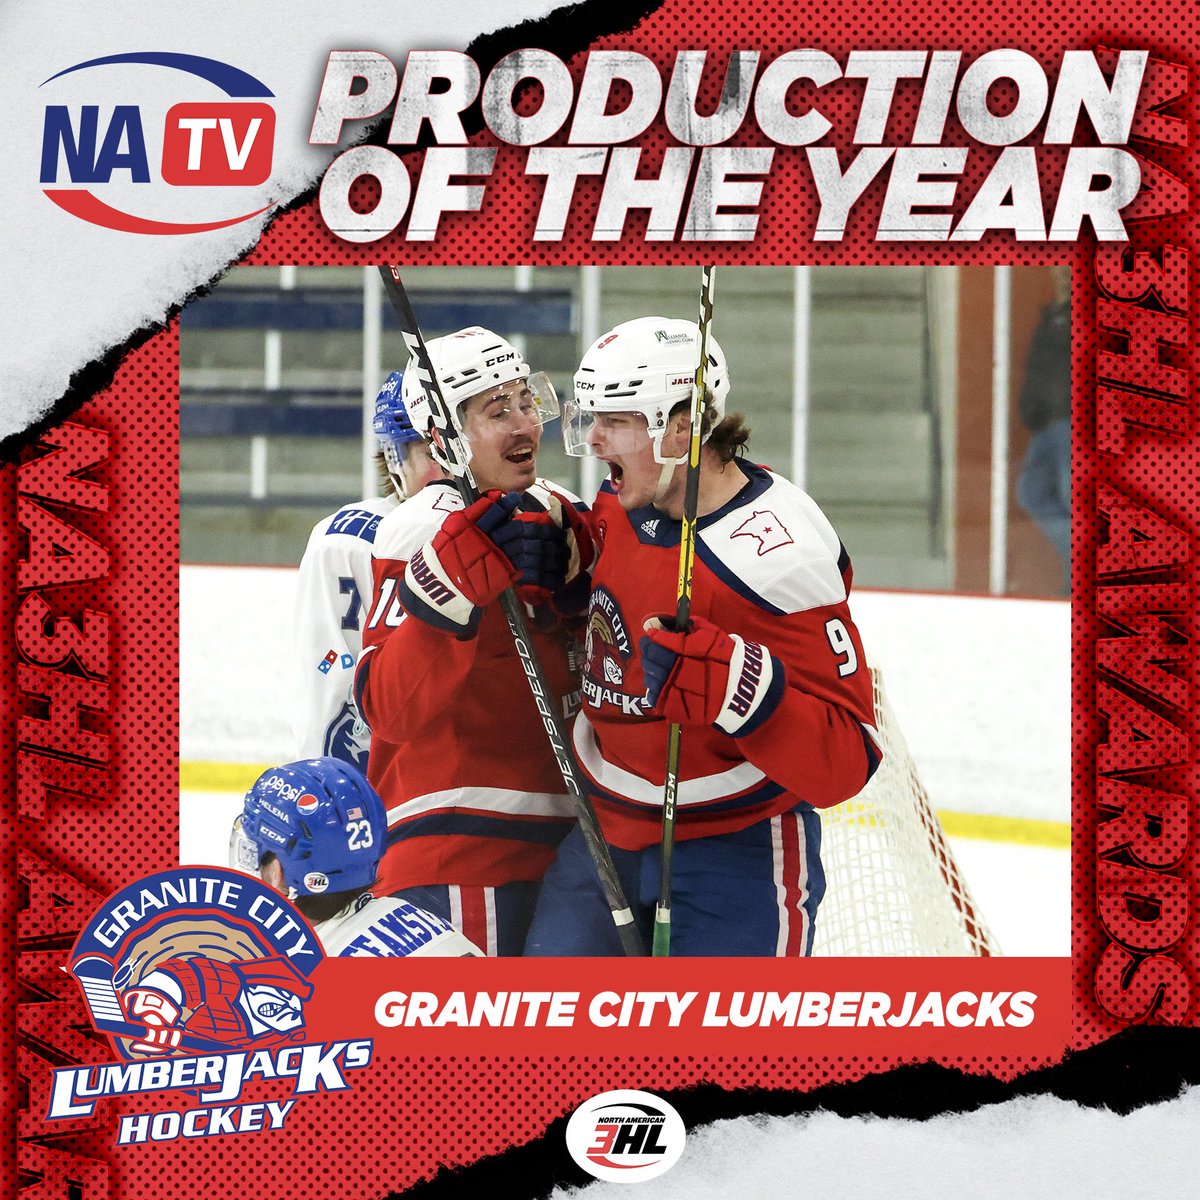 2023-2024 #NA3HL NA TV Production of the Year: Granite City Lumberjacks